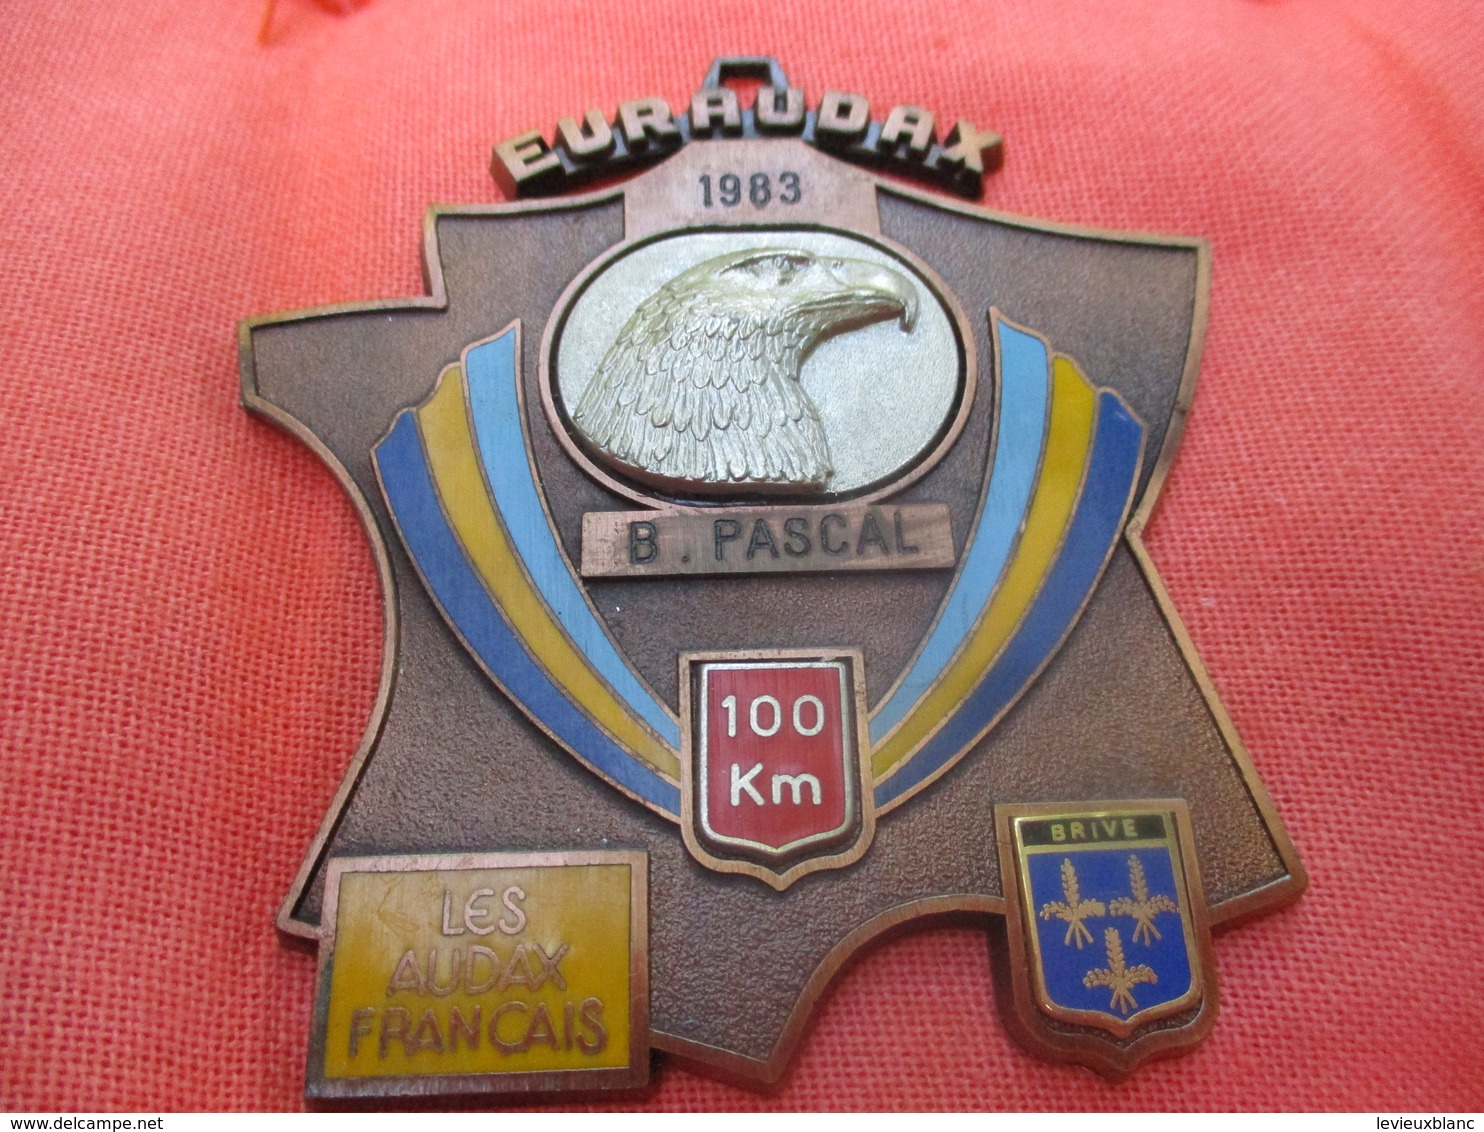 Médaille De Sport/Cyclisme/ EURAUDAX/100 KM/ / BRIVE/Les Audax Français/1983    SPO291 - Cyclisme